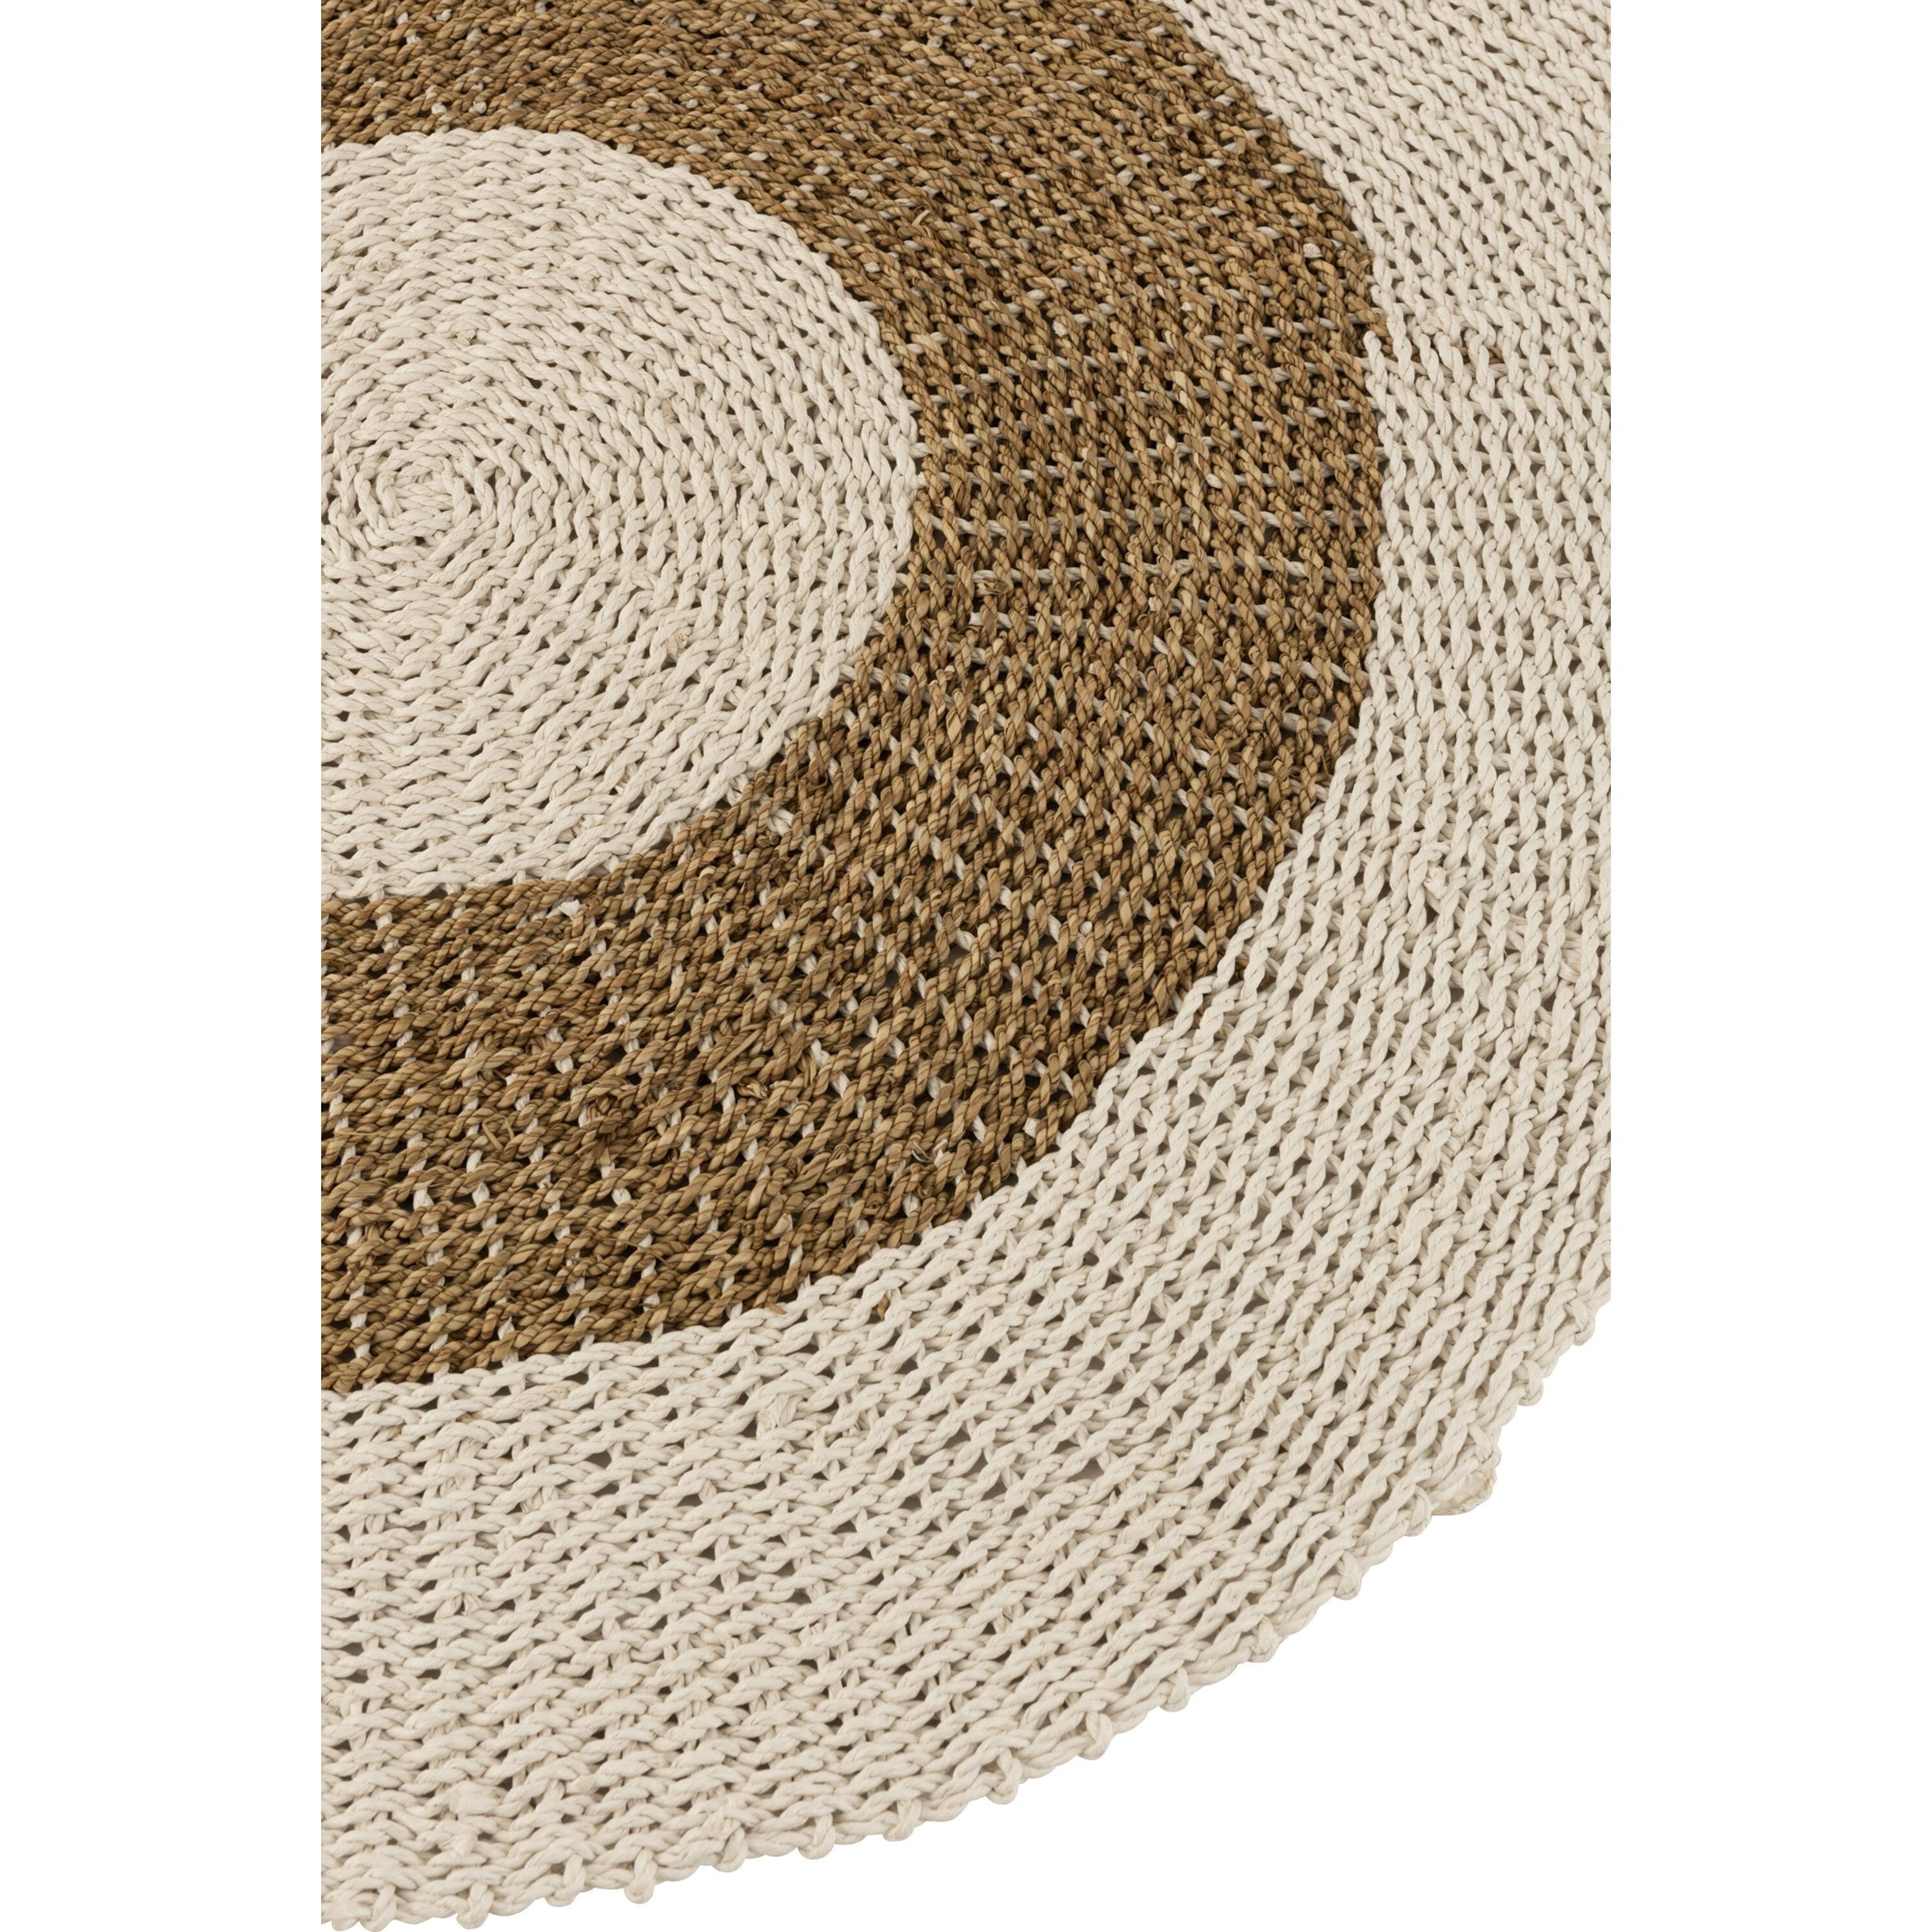 Carpet Round Seagrass White/natural Small